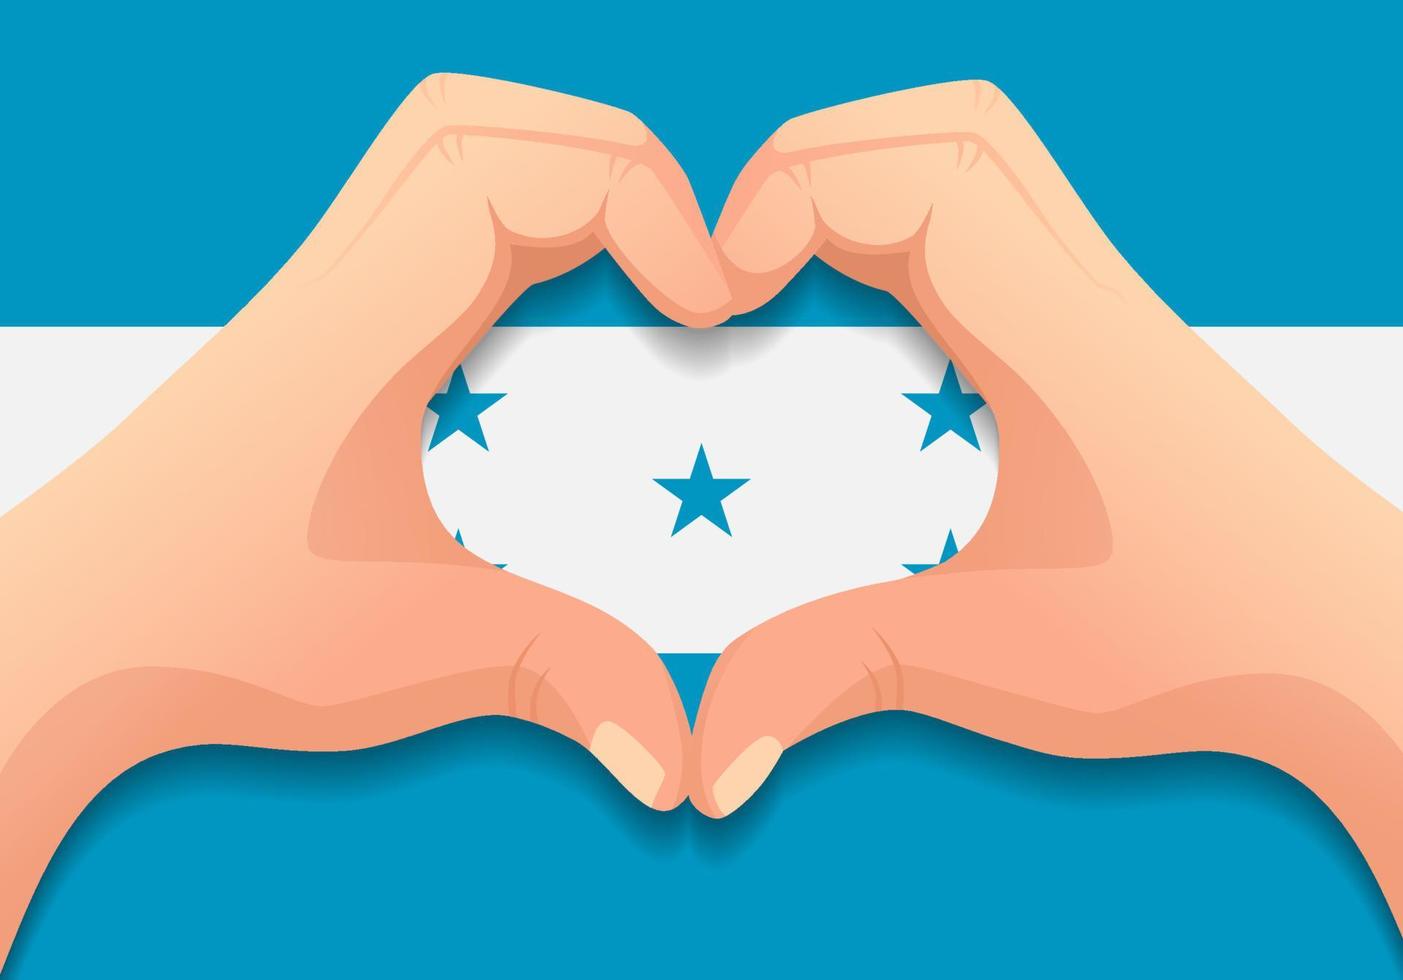 Honduras flag and hand heart shape vector